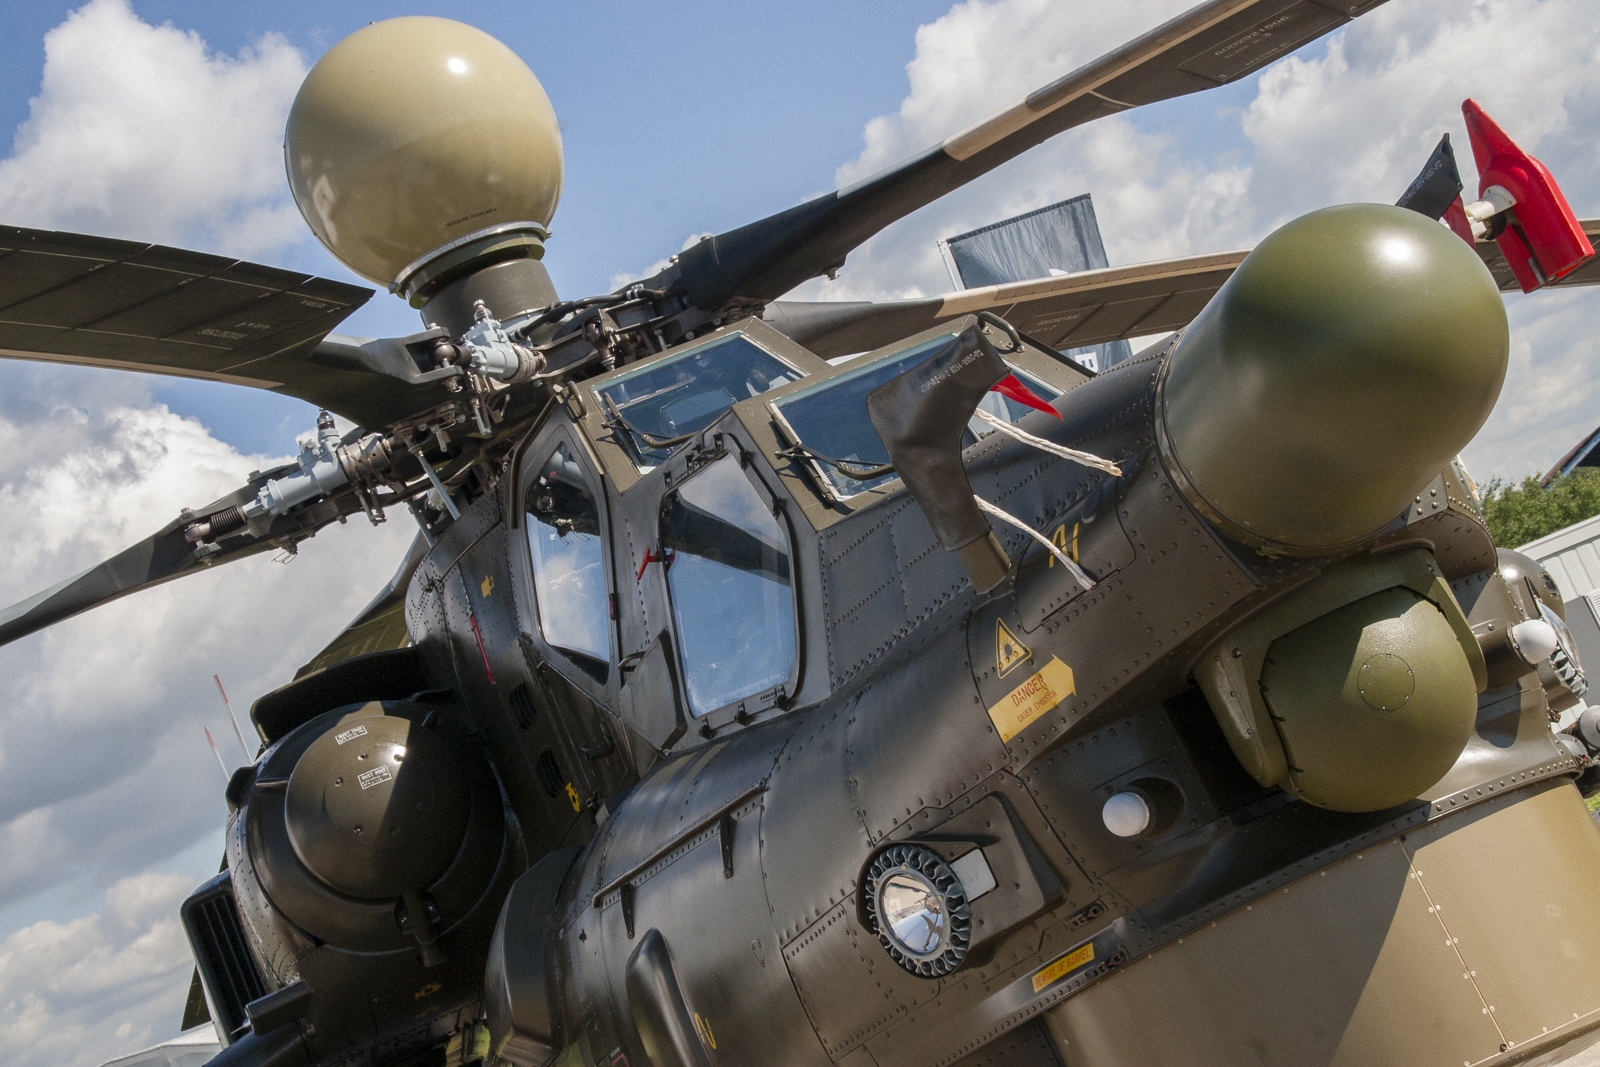 russian-helicopters-showcases-upgraded-mi-28ne-night-hunter-attack-helicopter-at-army-2018-forum-13187-gVFvnRns6alBhrXqzvCxVvXnF.jpg